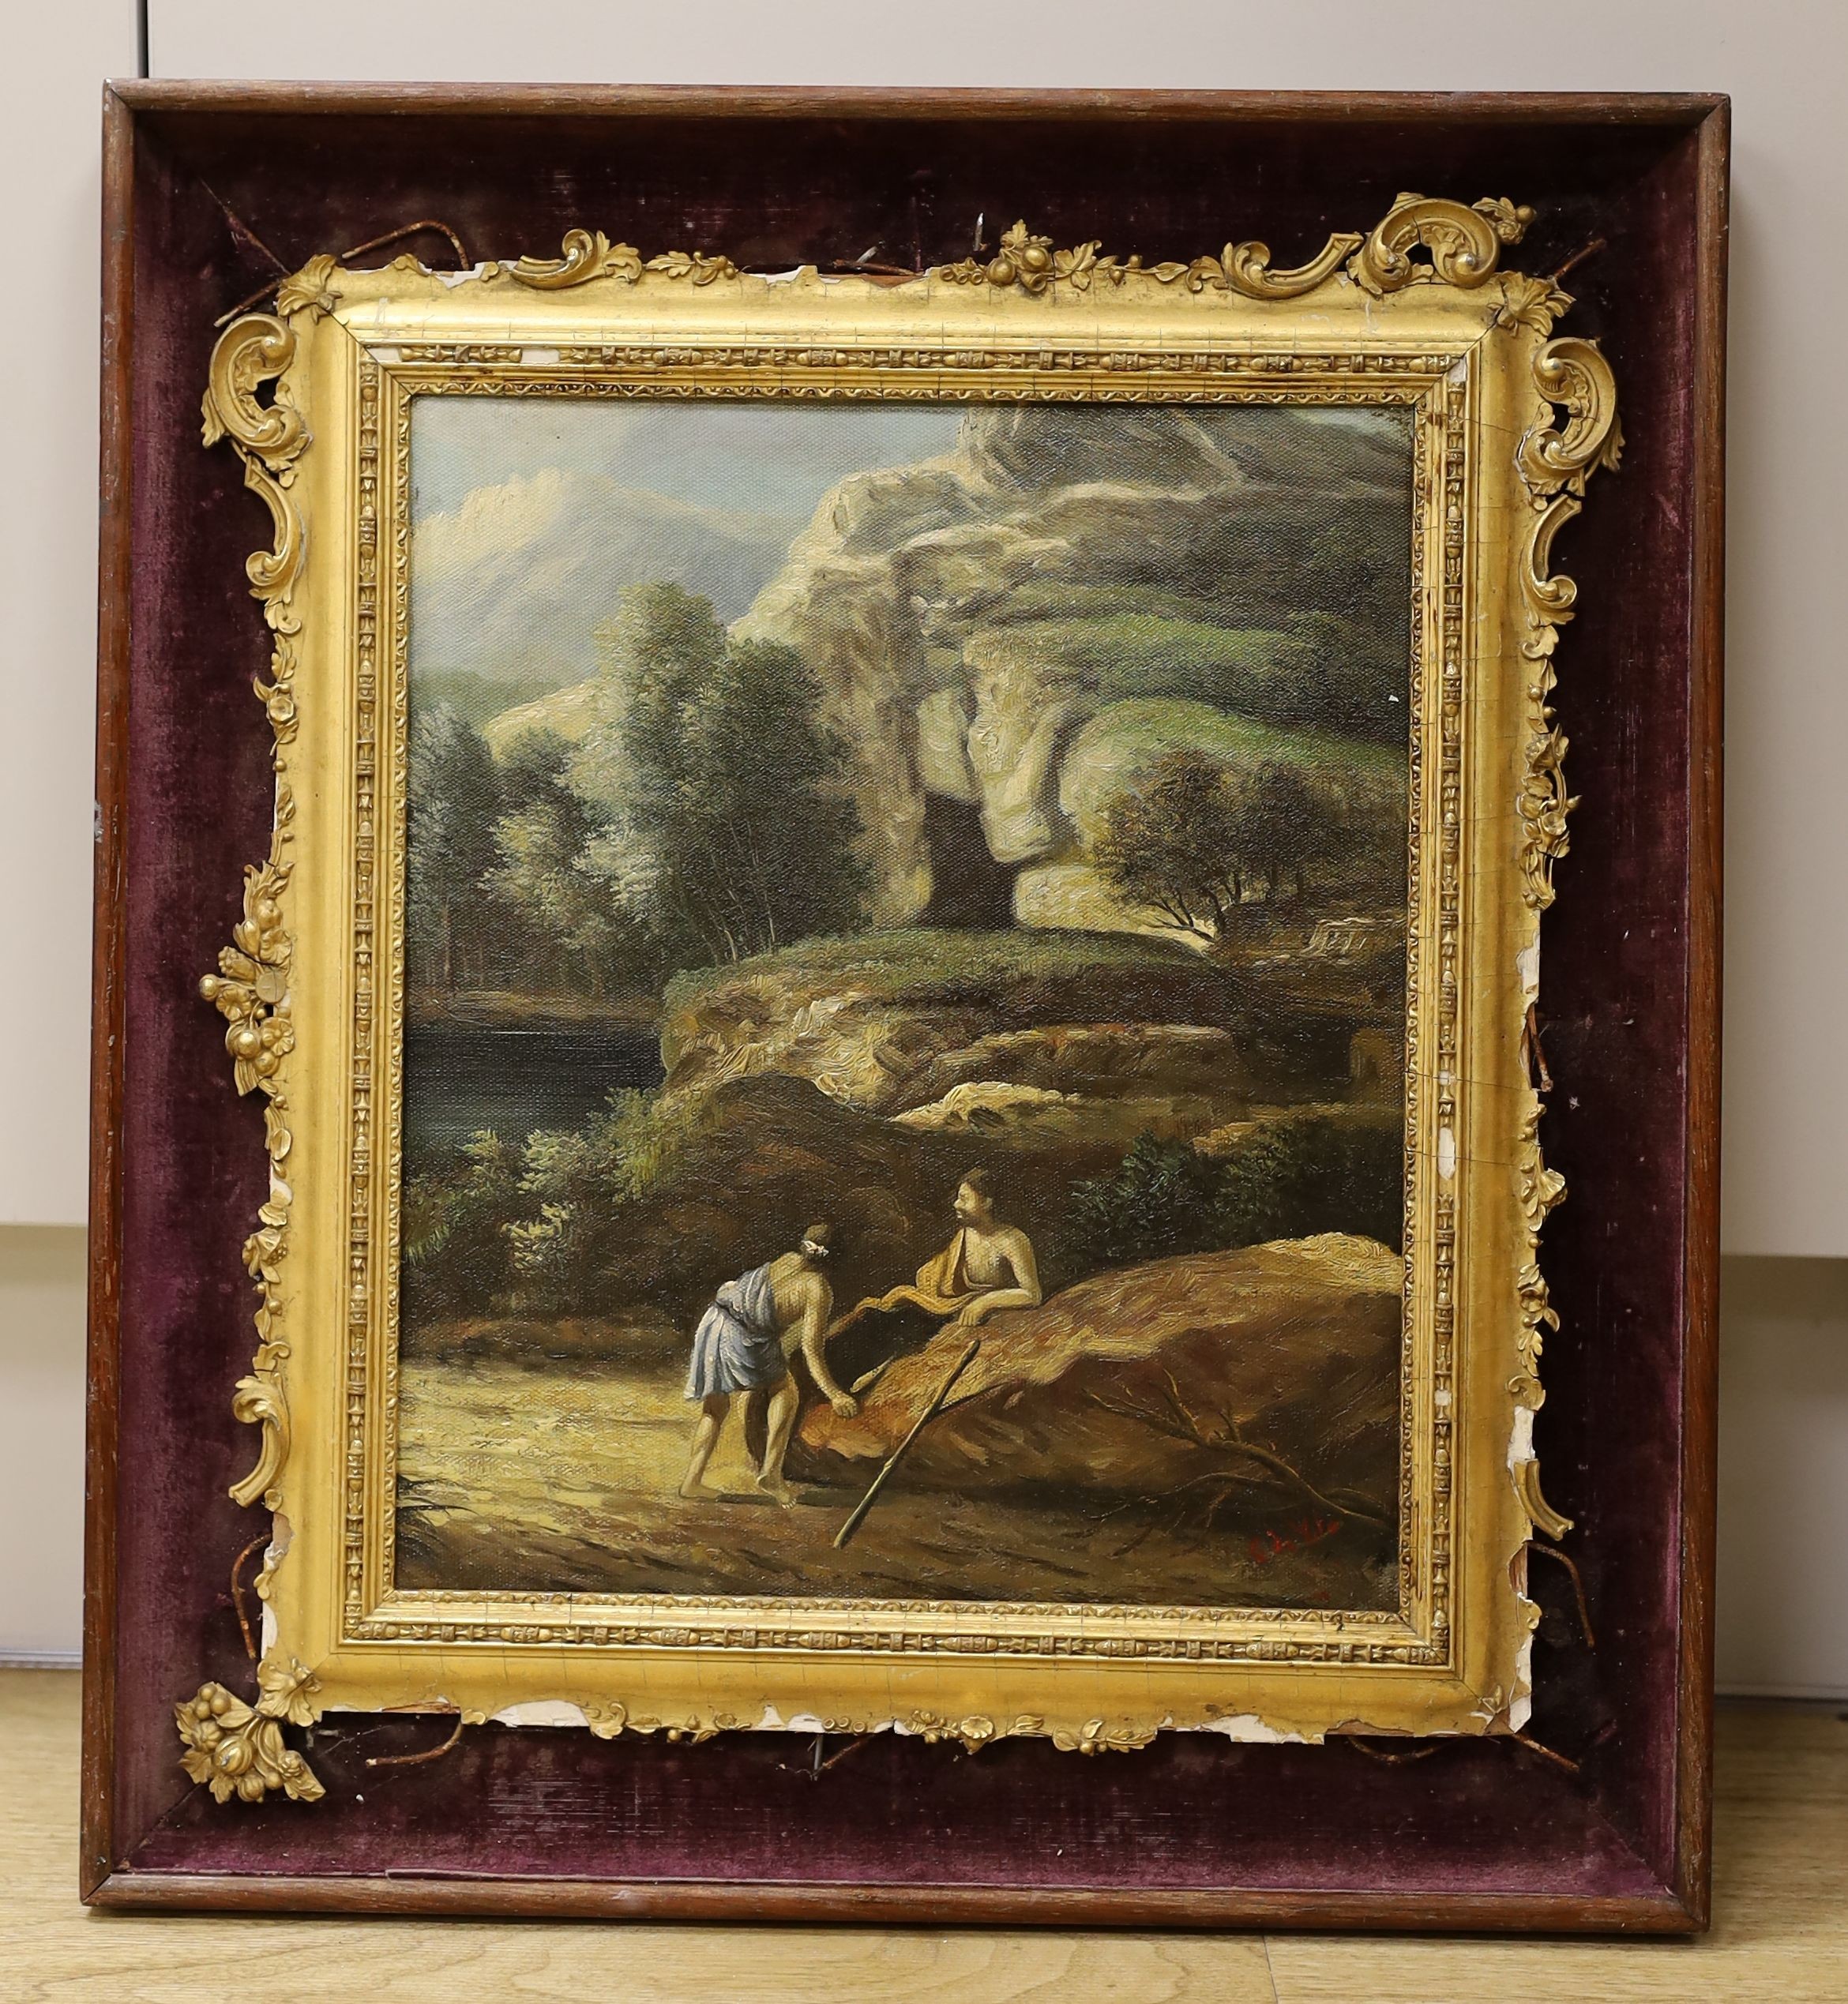 C. De Vito, oil on board, Figures in a classical landscape, signed, 30 x 25cm